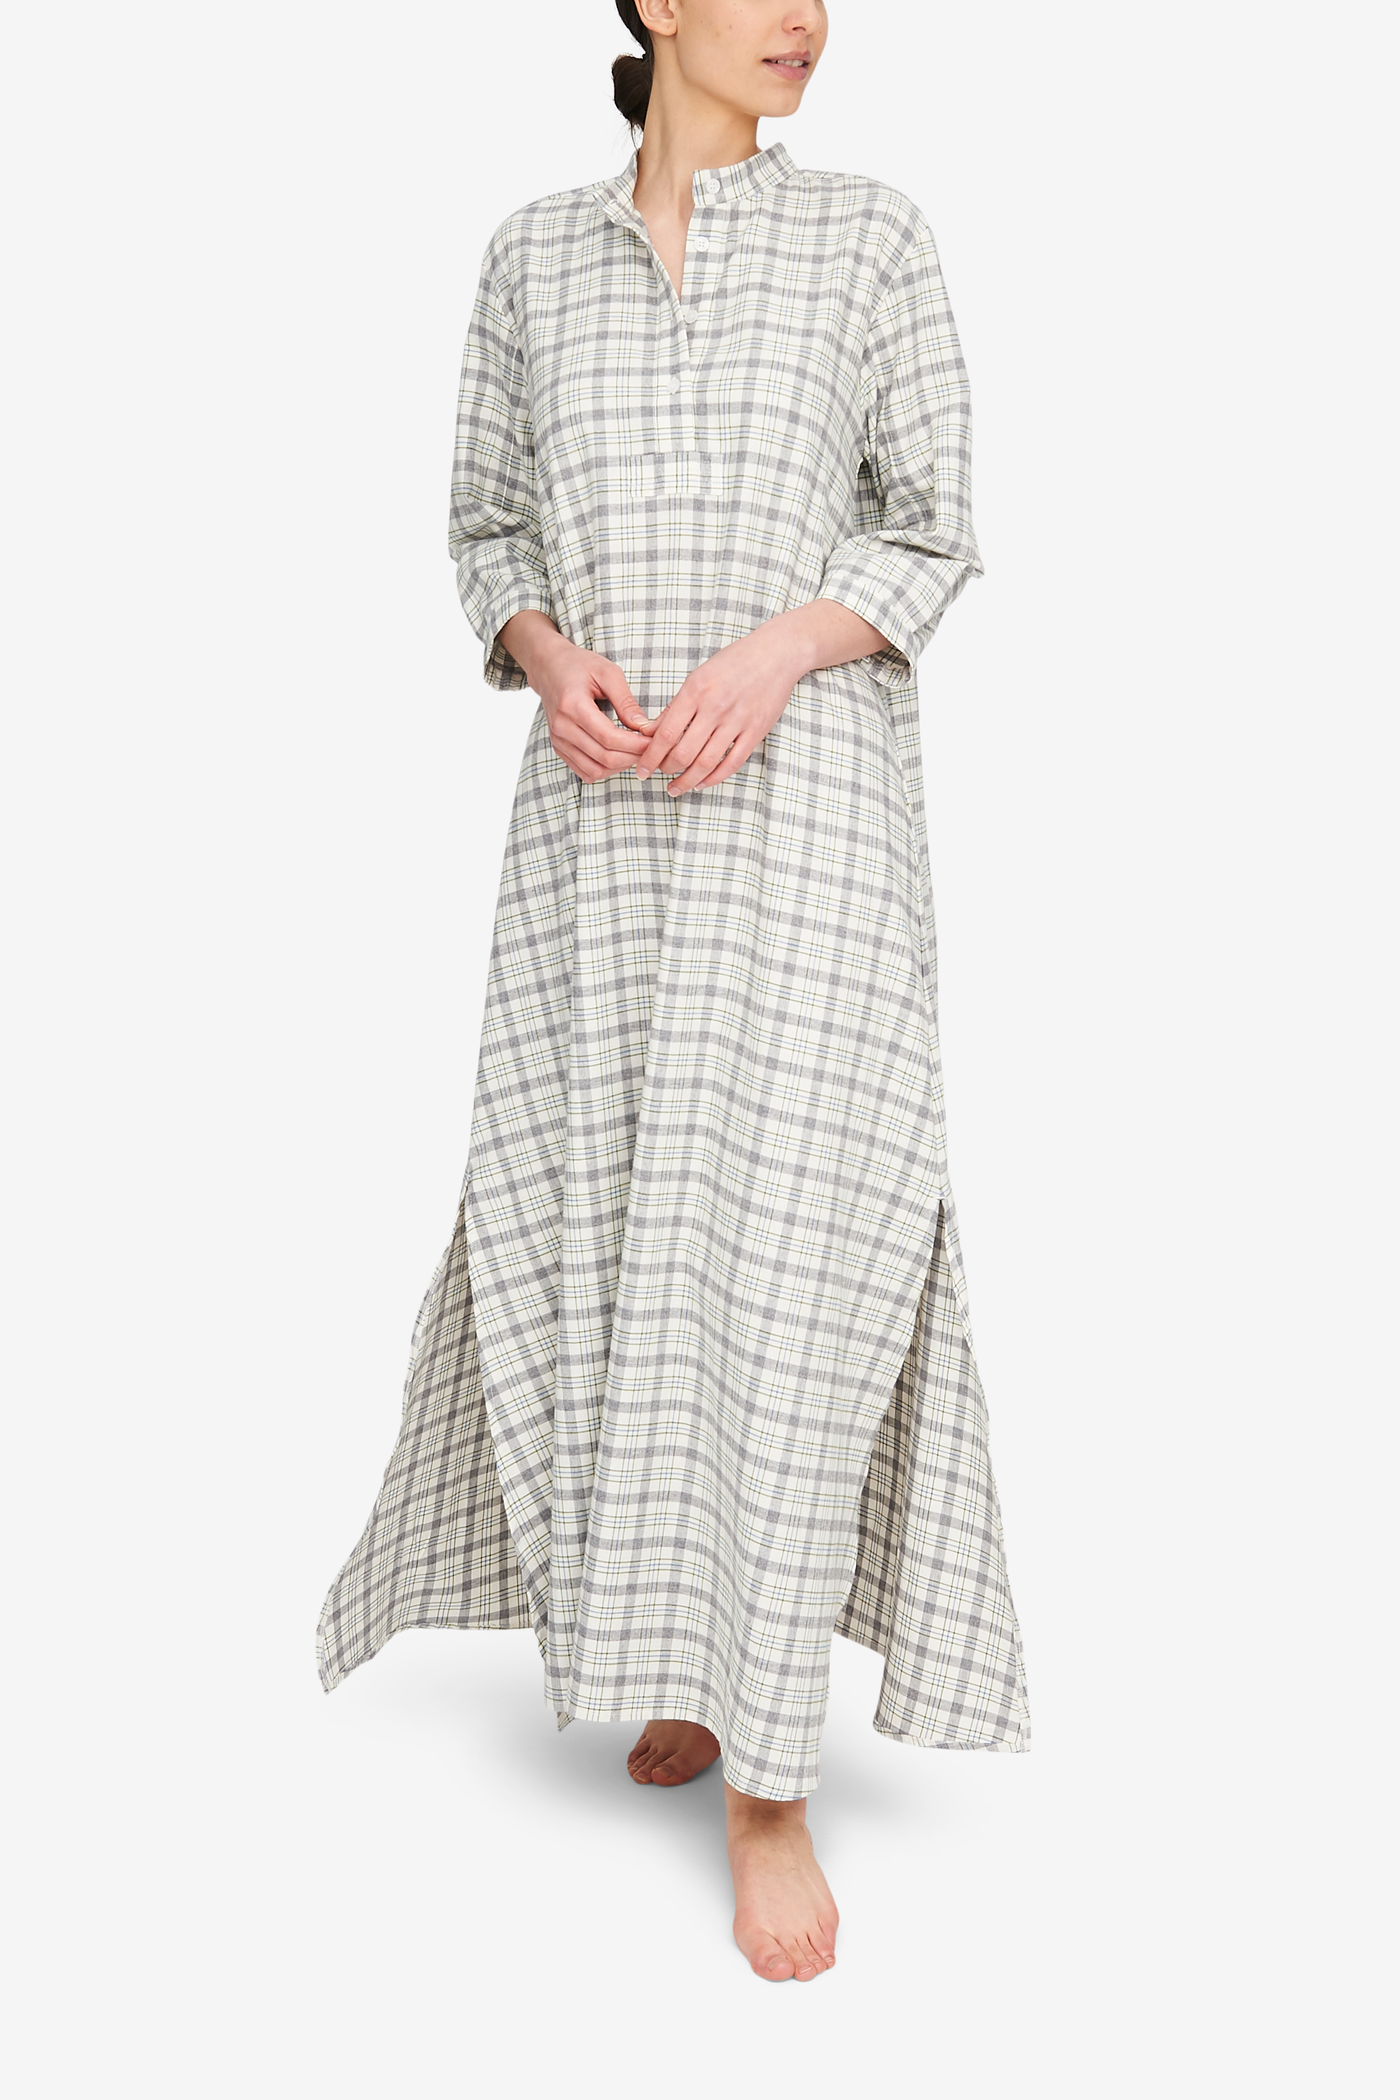 A woman wearing a full length Sleep Shirt. It's a super soft, lightweight, cream and grey plaid flannel.